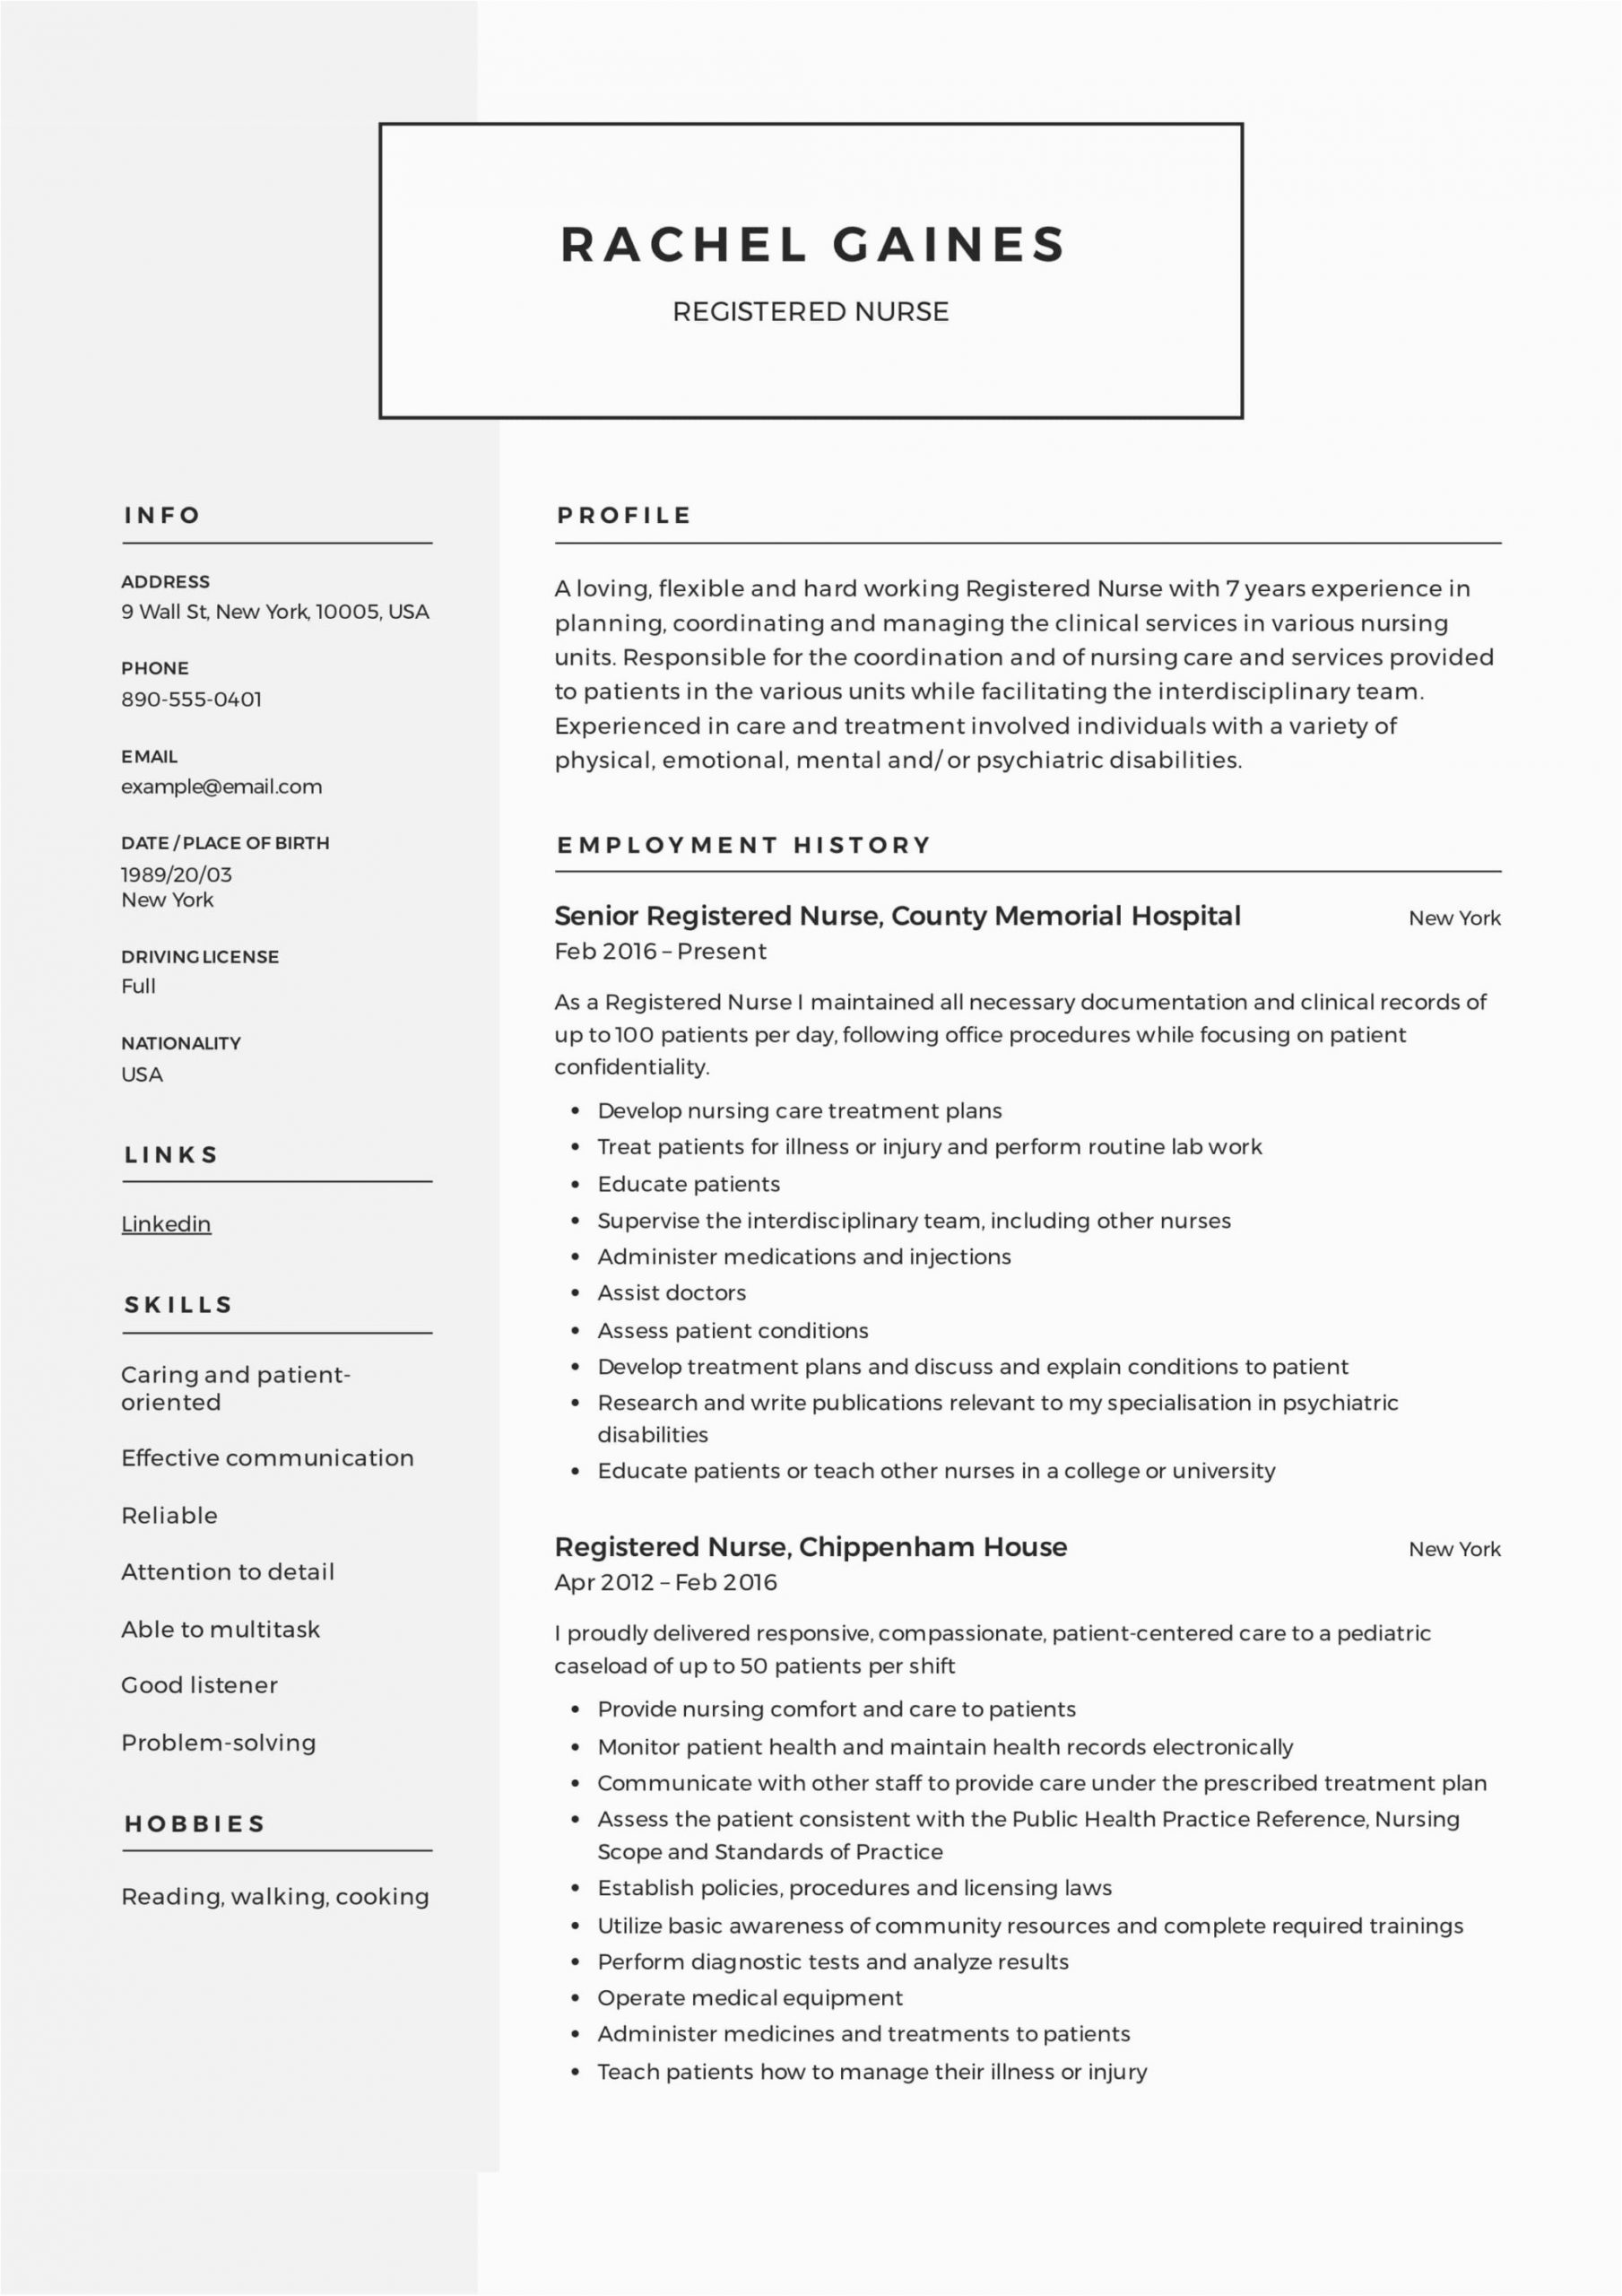 Sample Resume for Registered Nurse with Experience Registered Nurse Resume Sample & Writing Guide